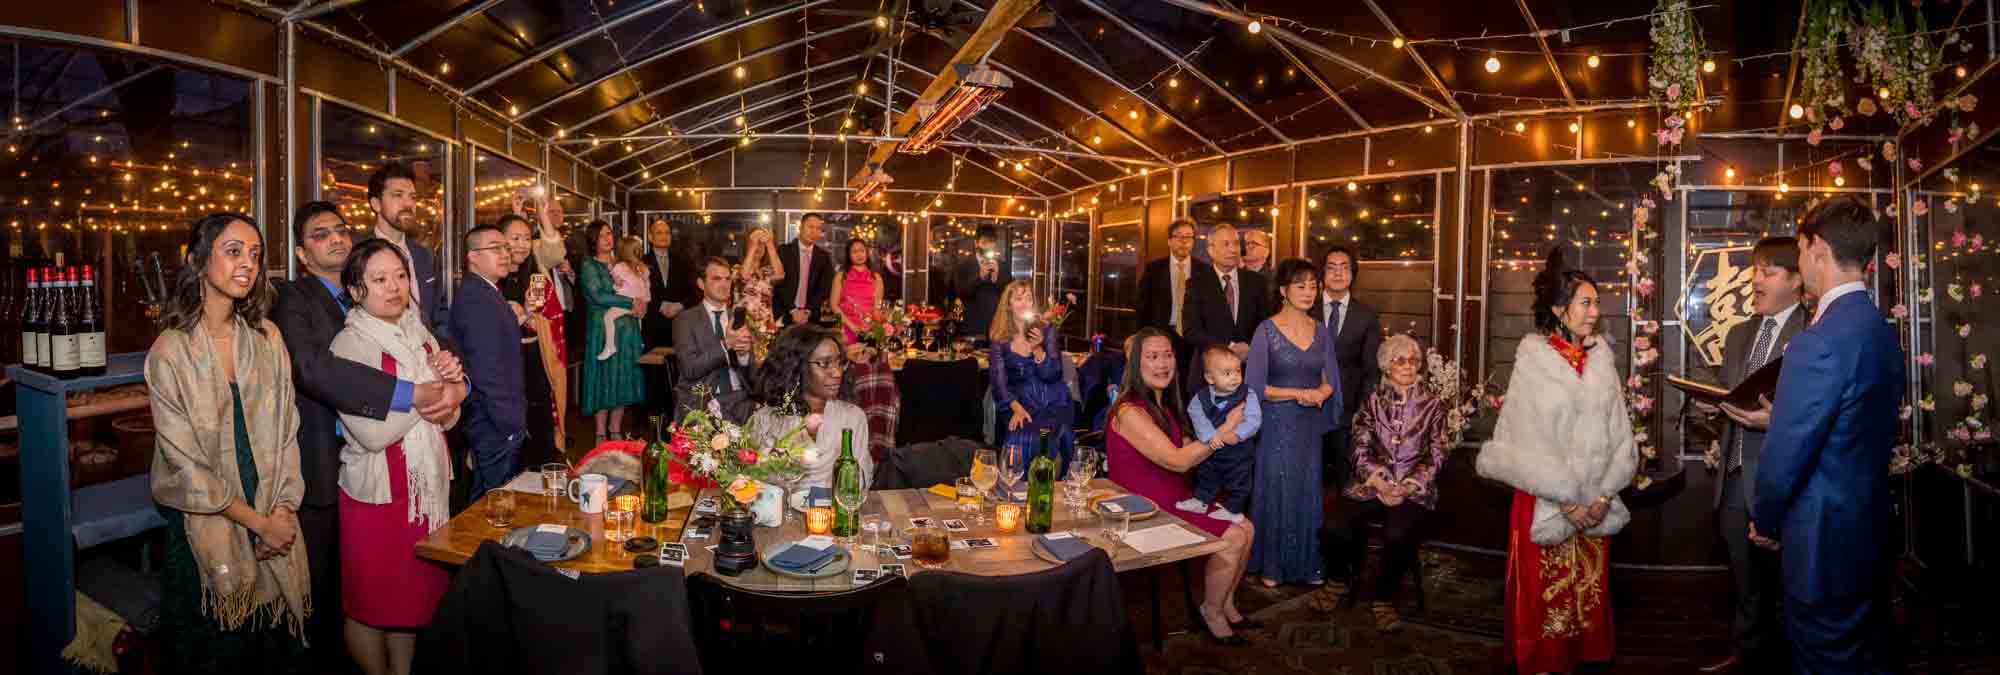 Panorama of guests enjoying a Brooklyn restaurant wedding